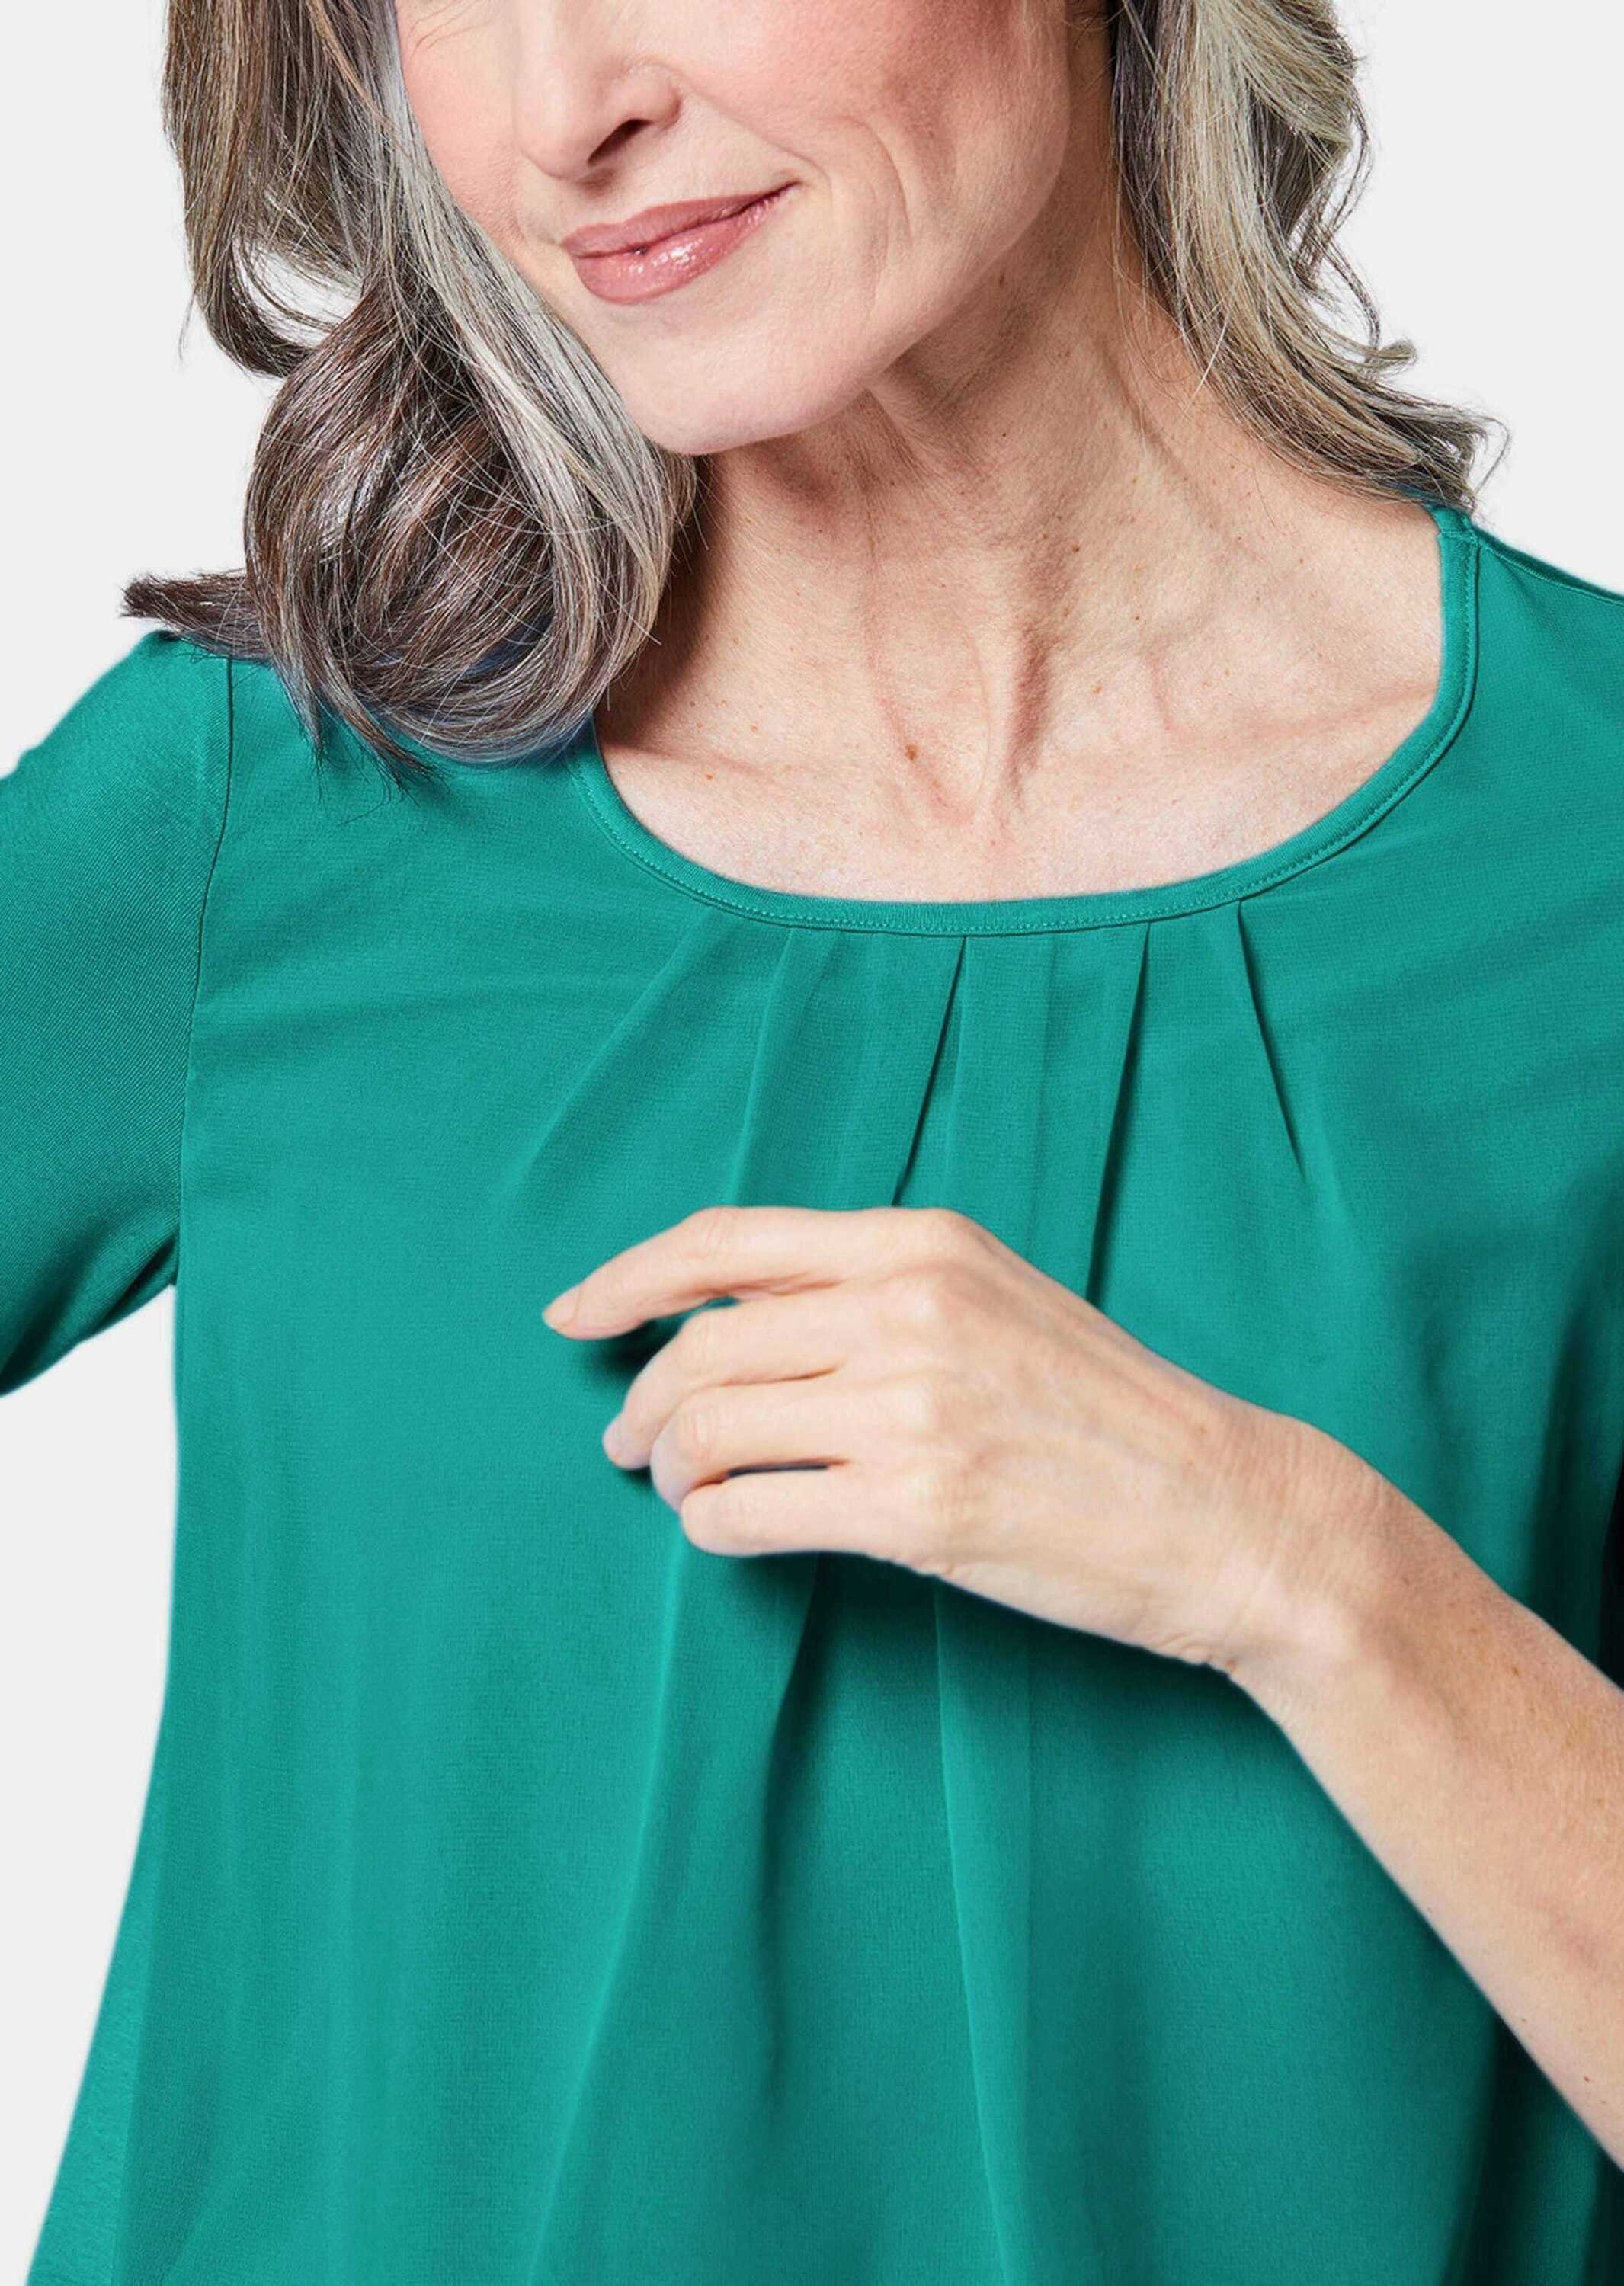 Blusen-Optik GOLDNER Gepflegtes smaragdgrün eleganter Shirt Kurzarmbluse in